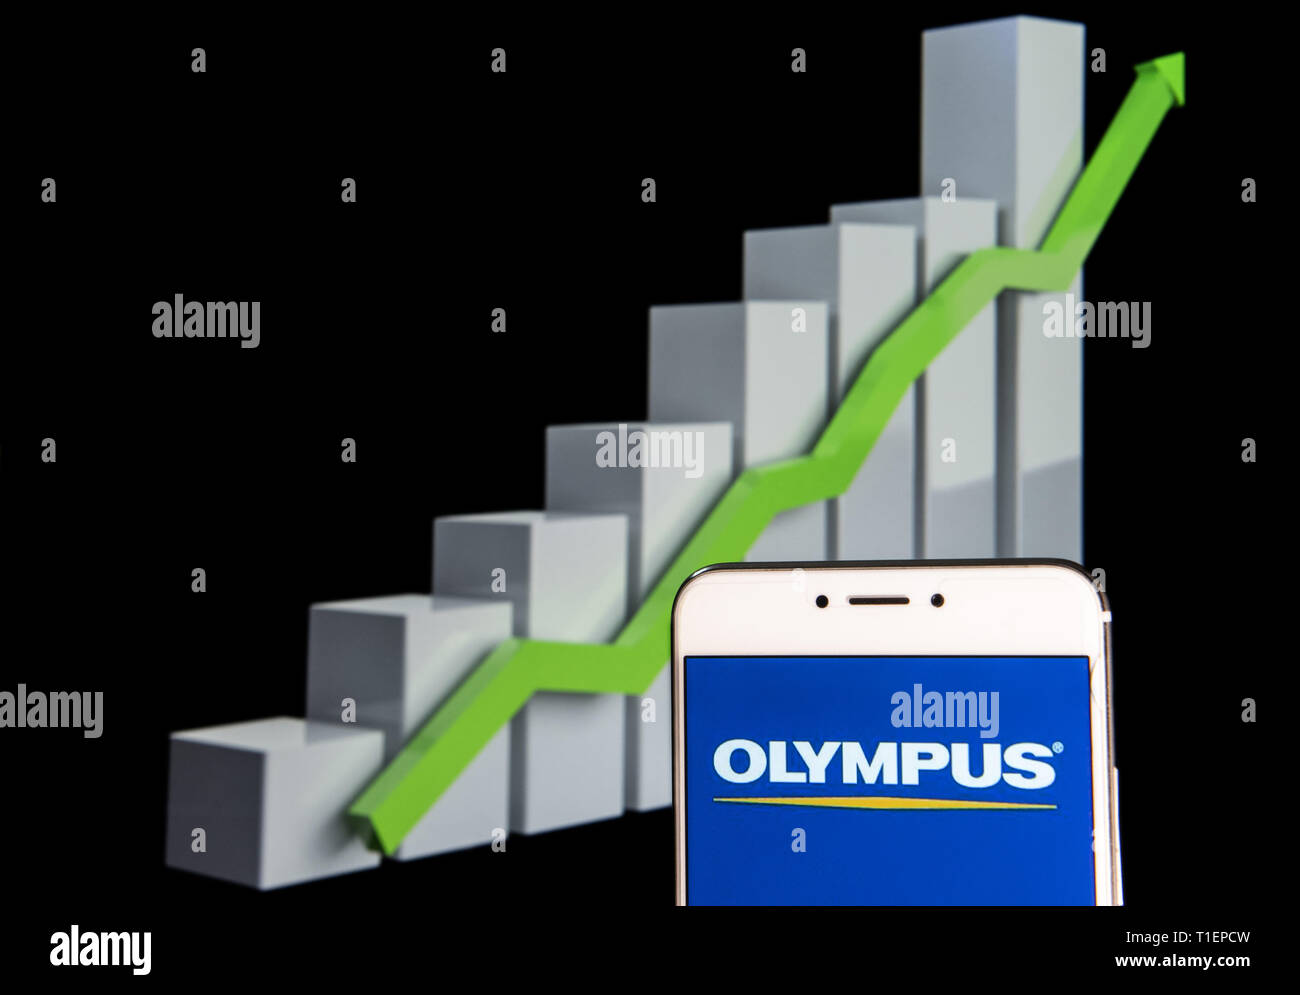 Olympus Stock Chart